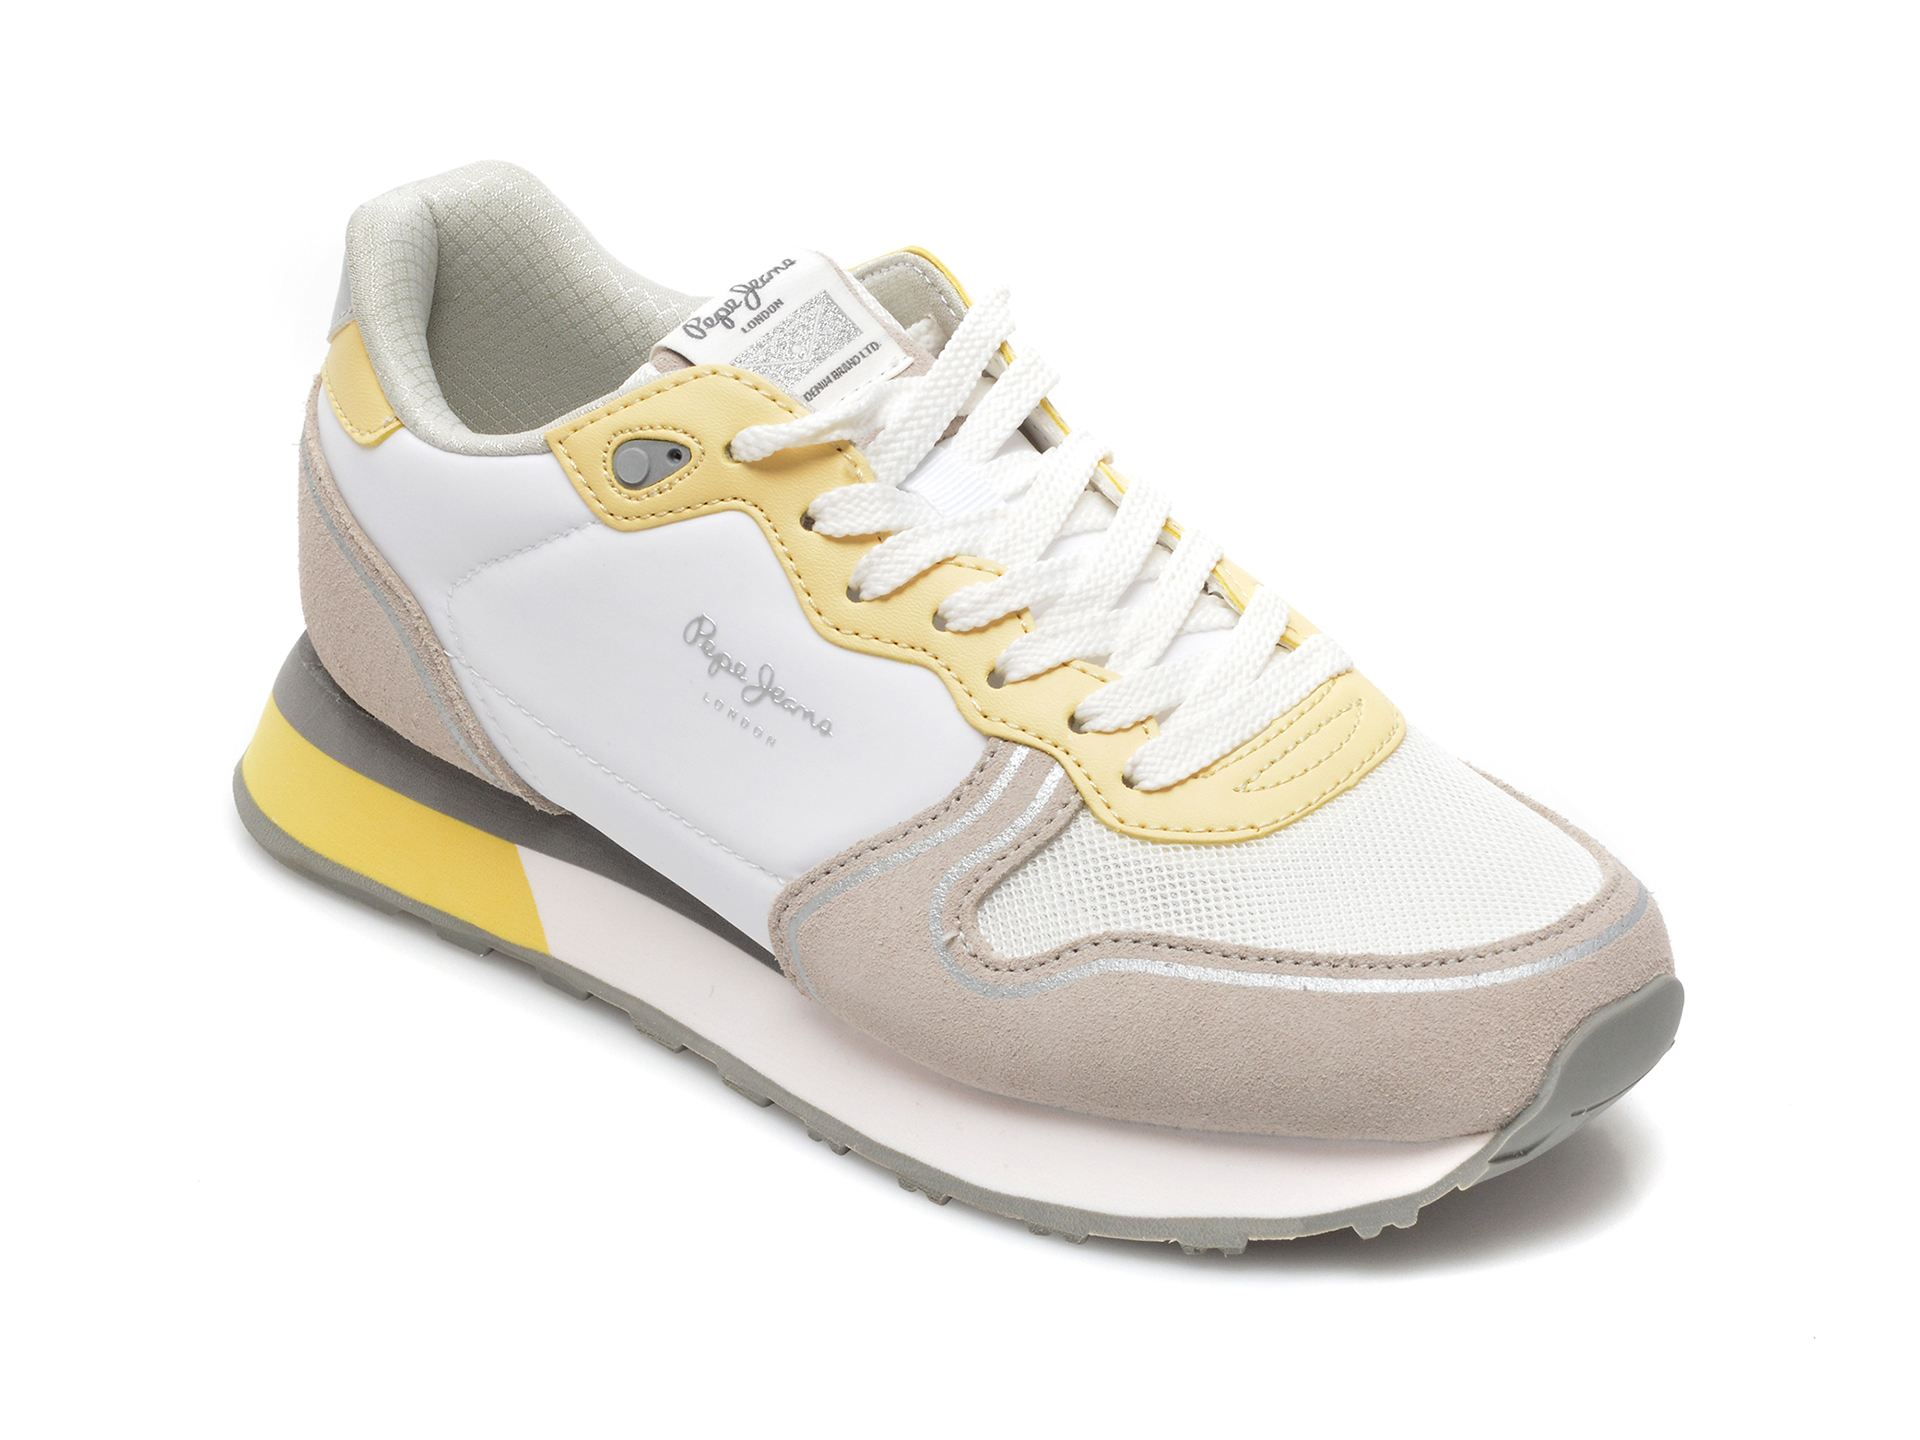 Pantofi sport PEPE JEANS albi, 3116299, din material textil si piele naturala